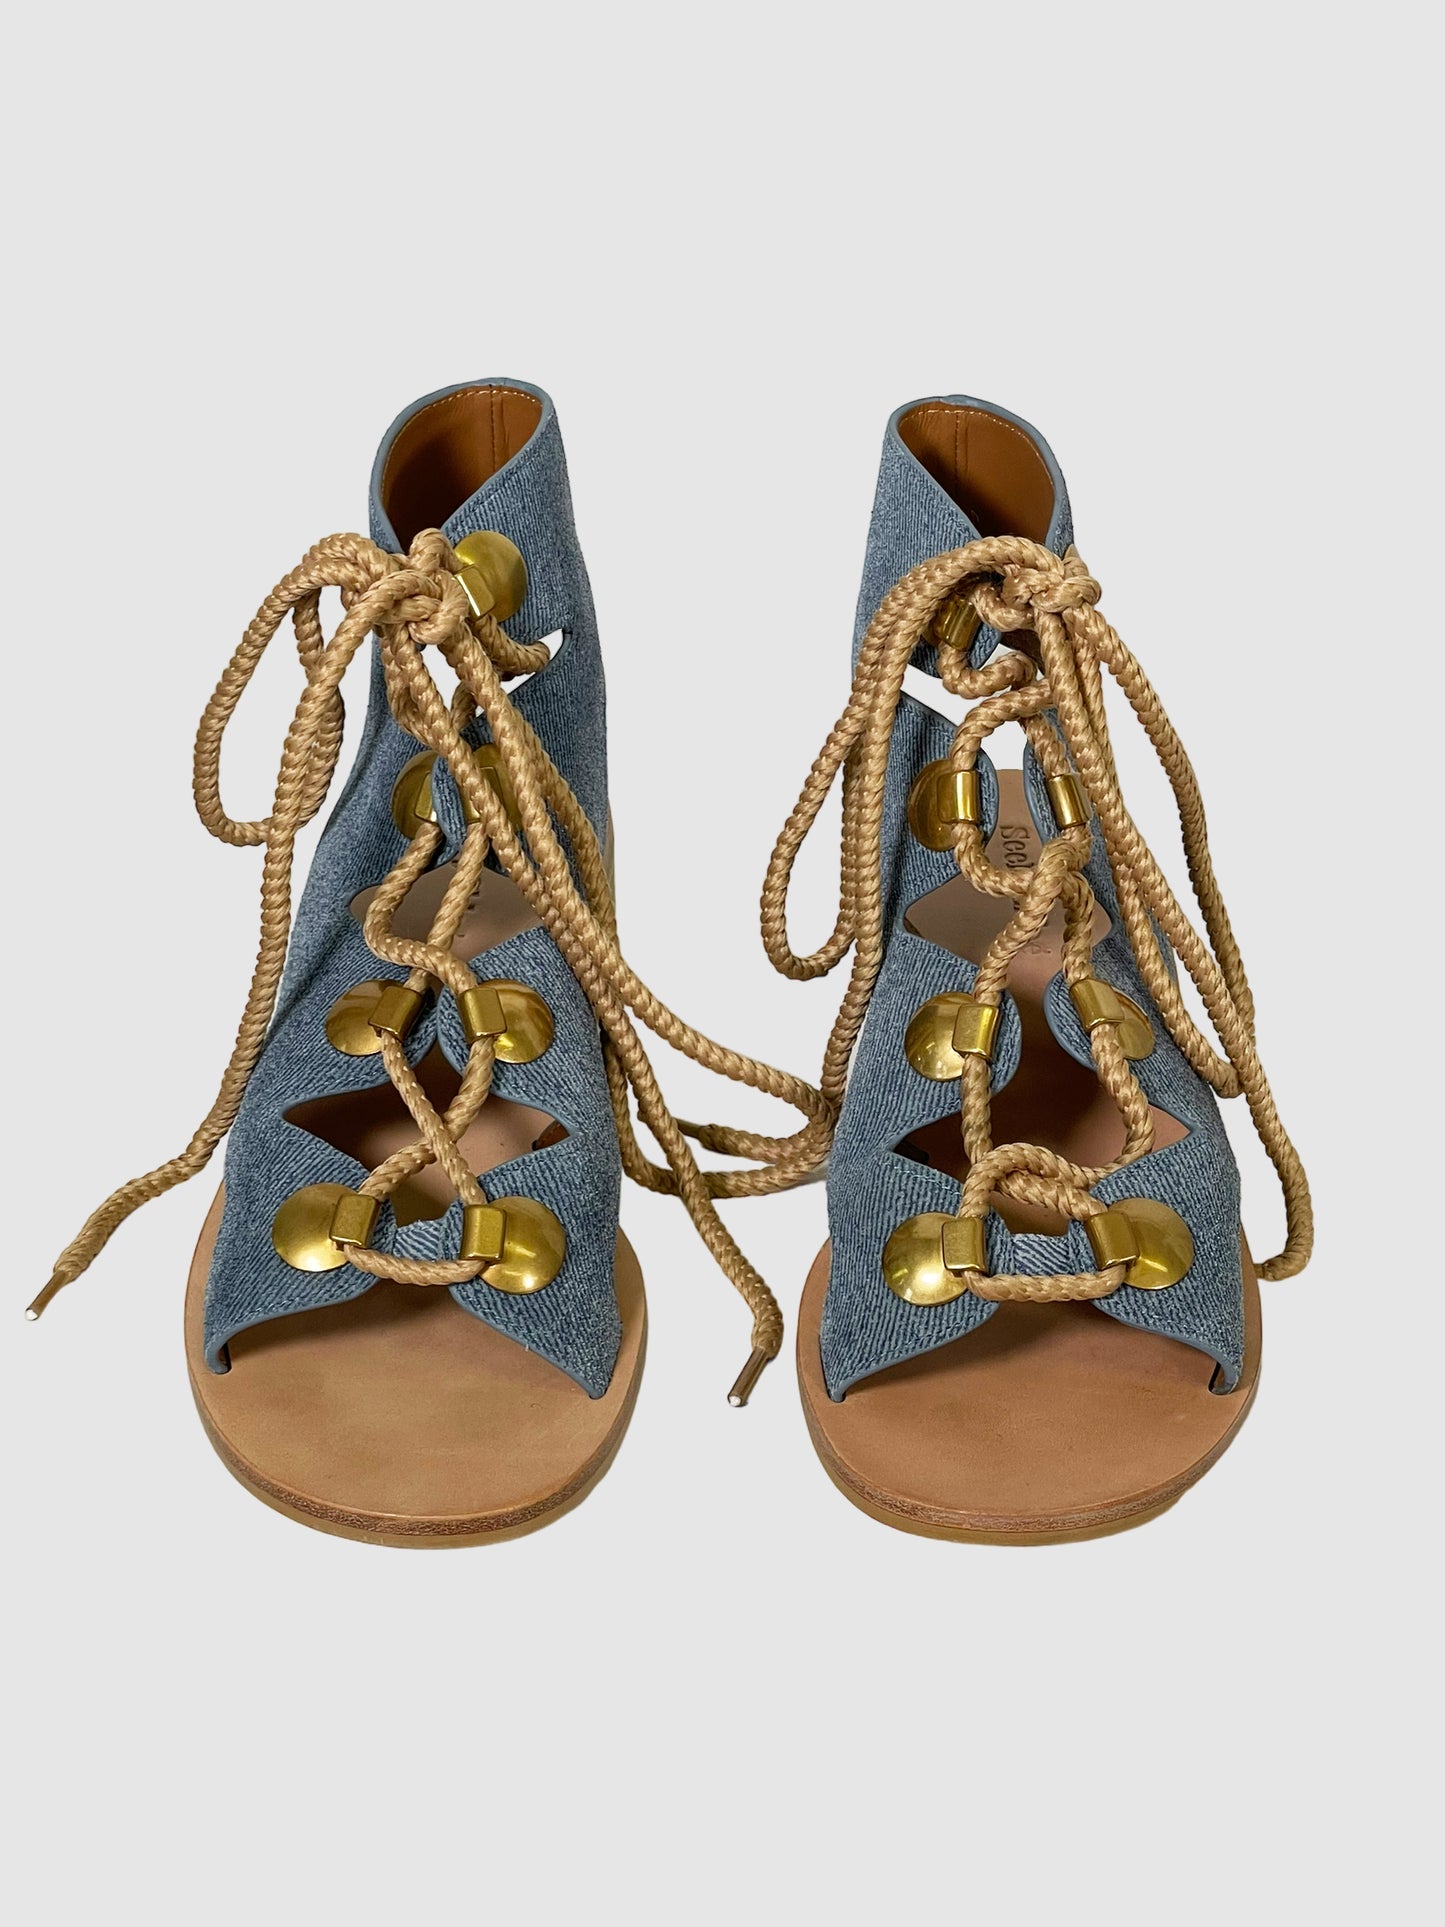 See by Chloe Denim Gladiator Sandals - Size 37